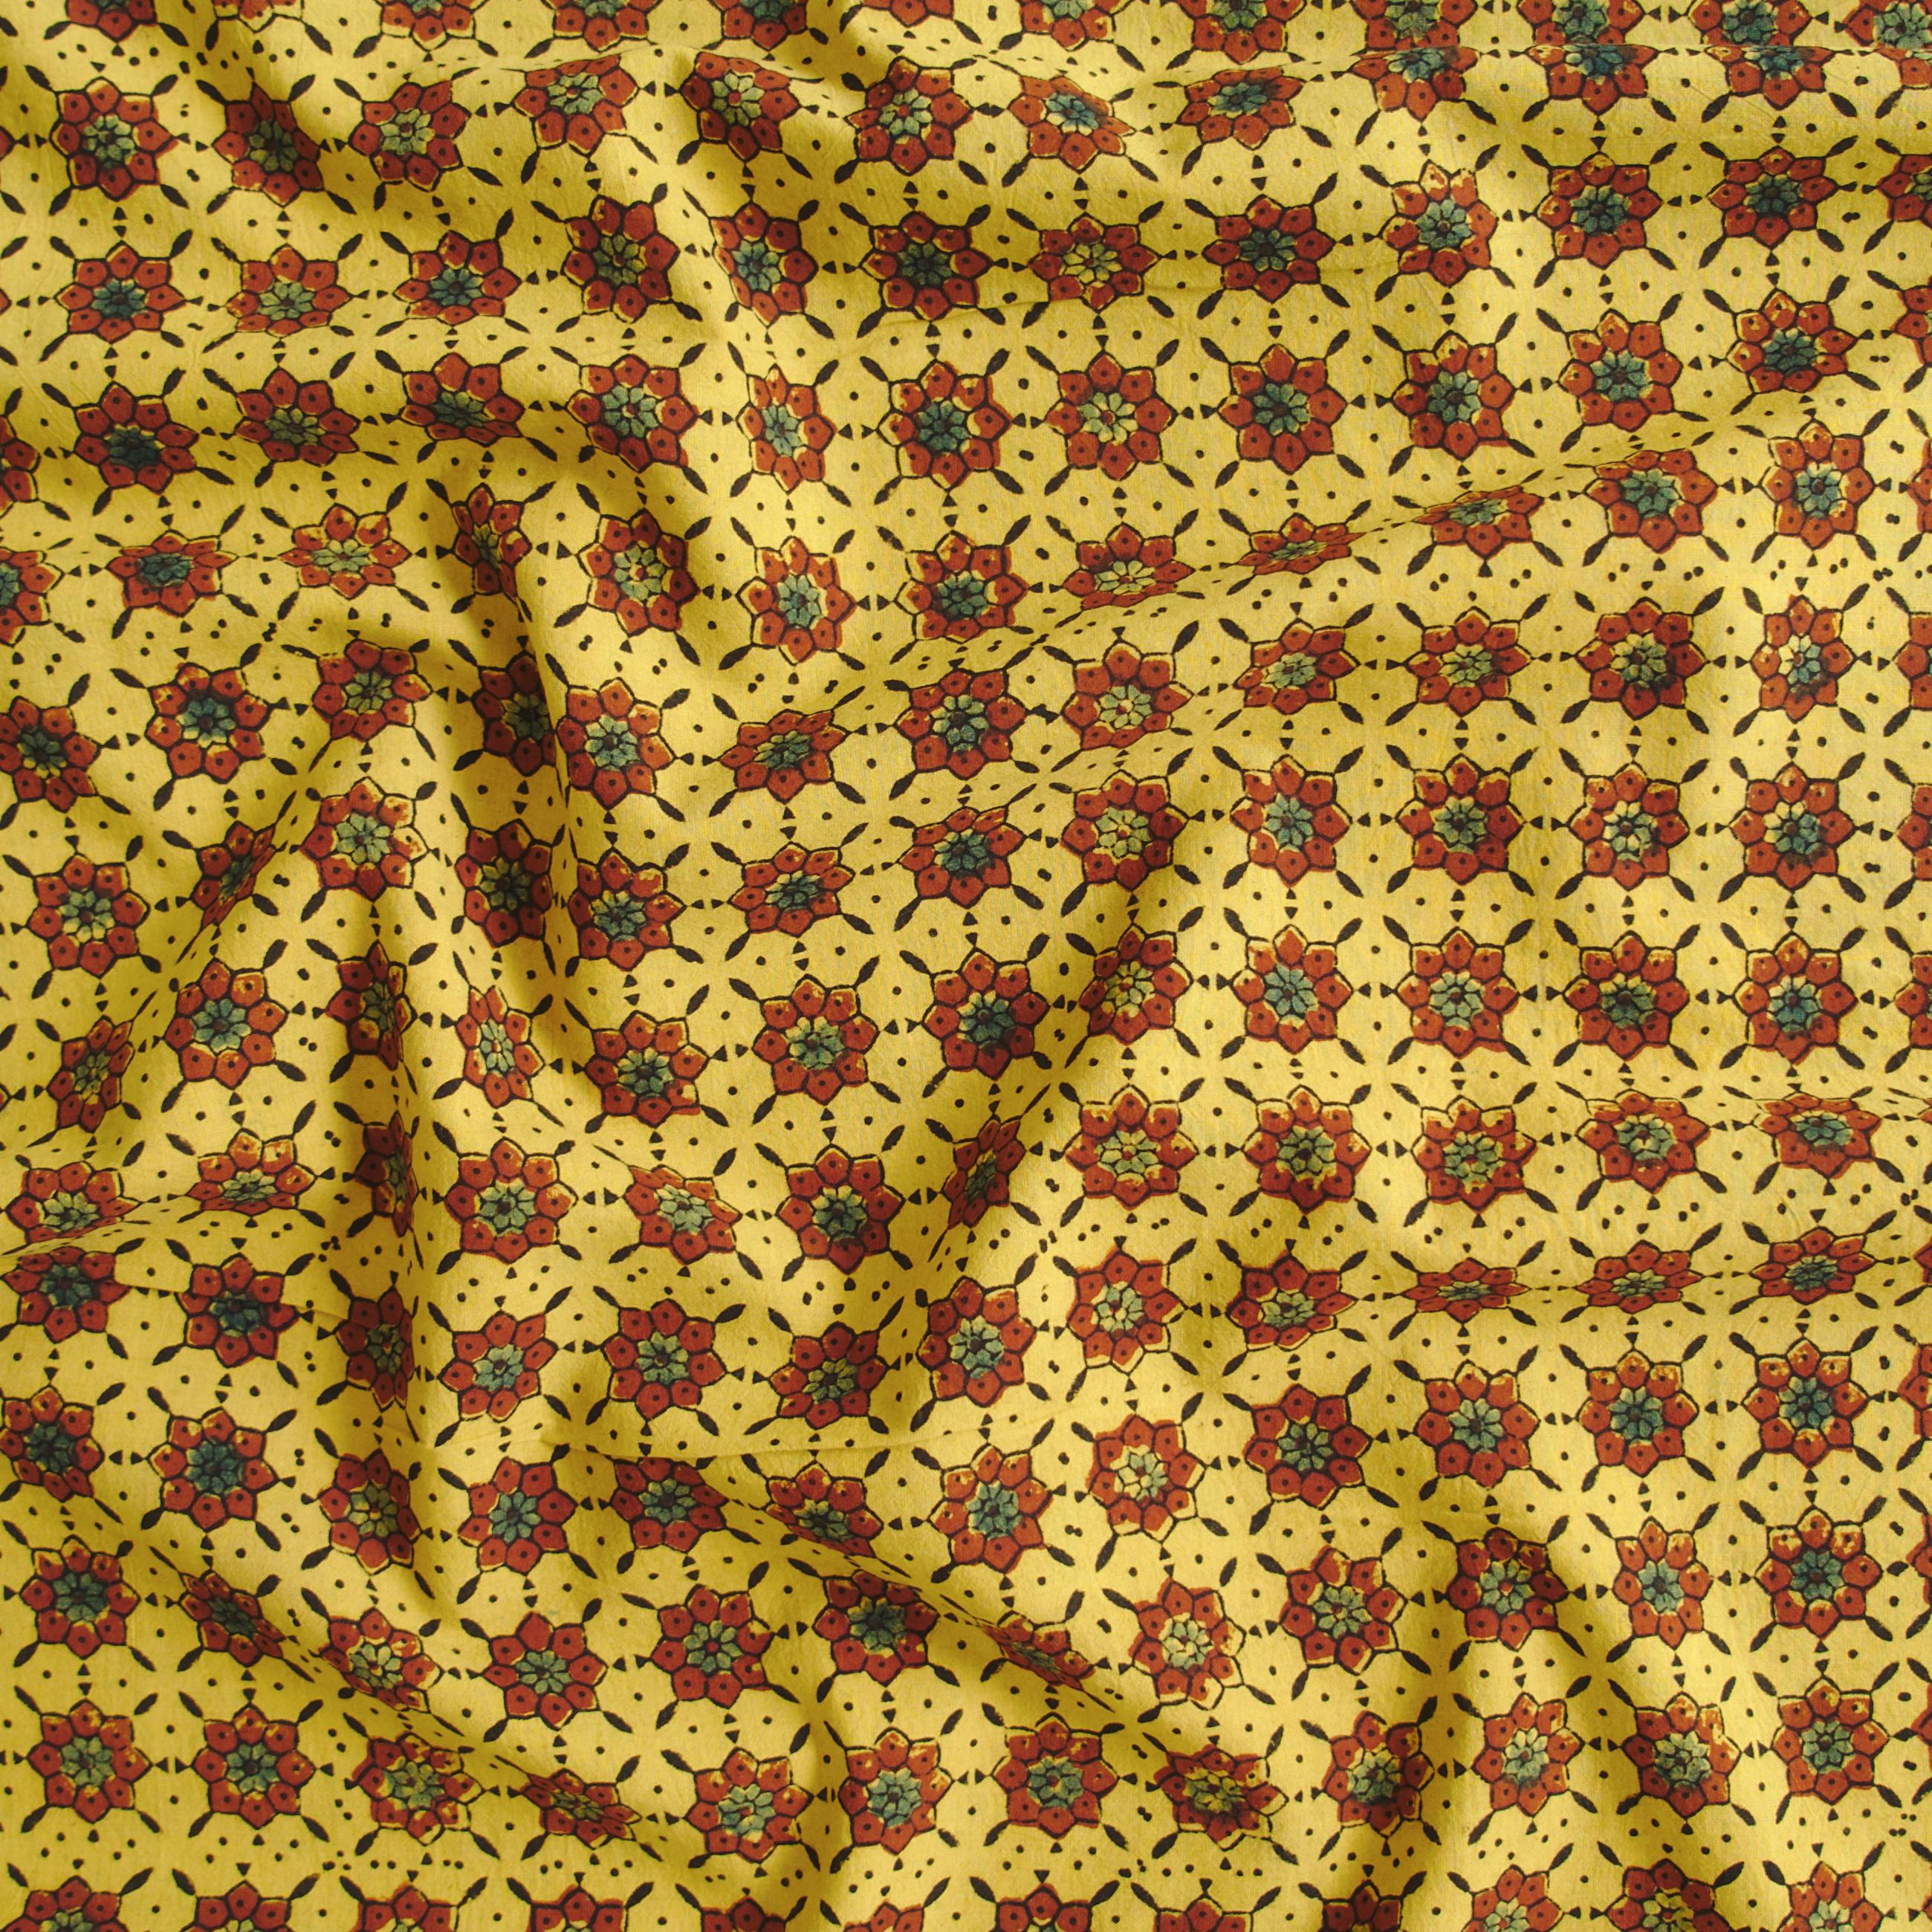 100% Printed Cotton - Starburst Print - Turmeric Yellow, Alizarin Red, Black, Indigo - Contrast